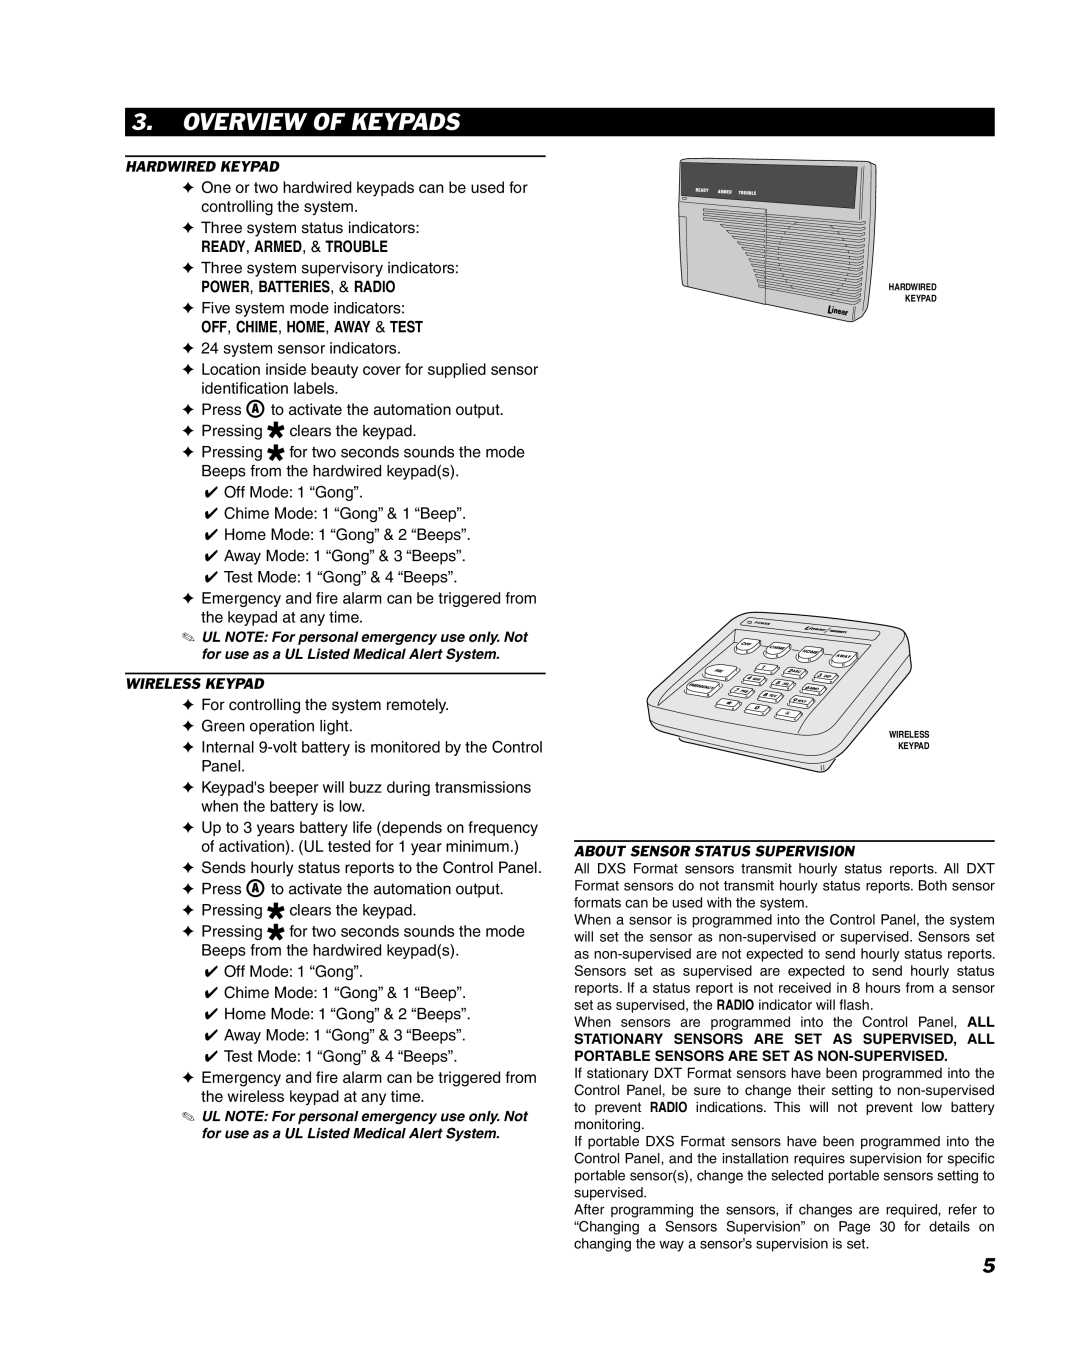 Linear DUAL 824 Overview Of Keypads, Hardwired Keypad, Ready, Armed, & Trouble, Power, Batteries, & Radio, Wireless Keypad 